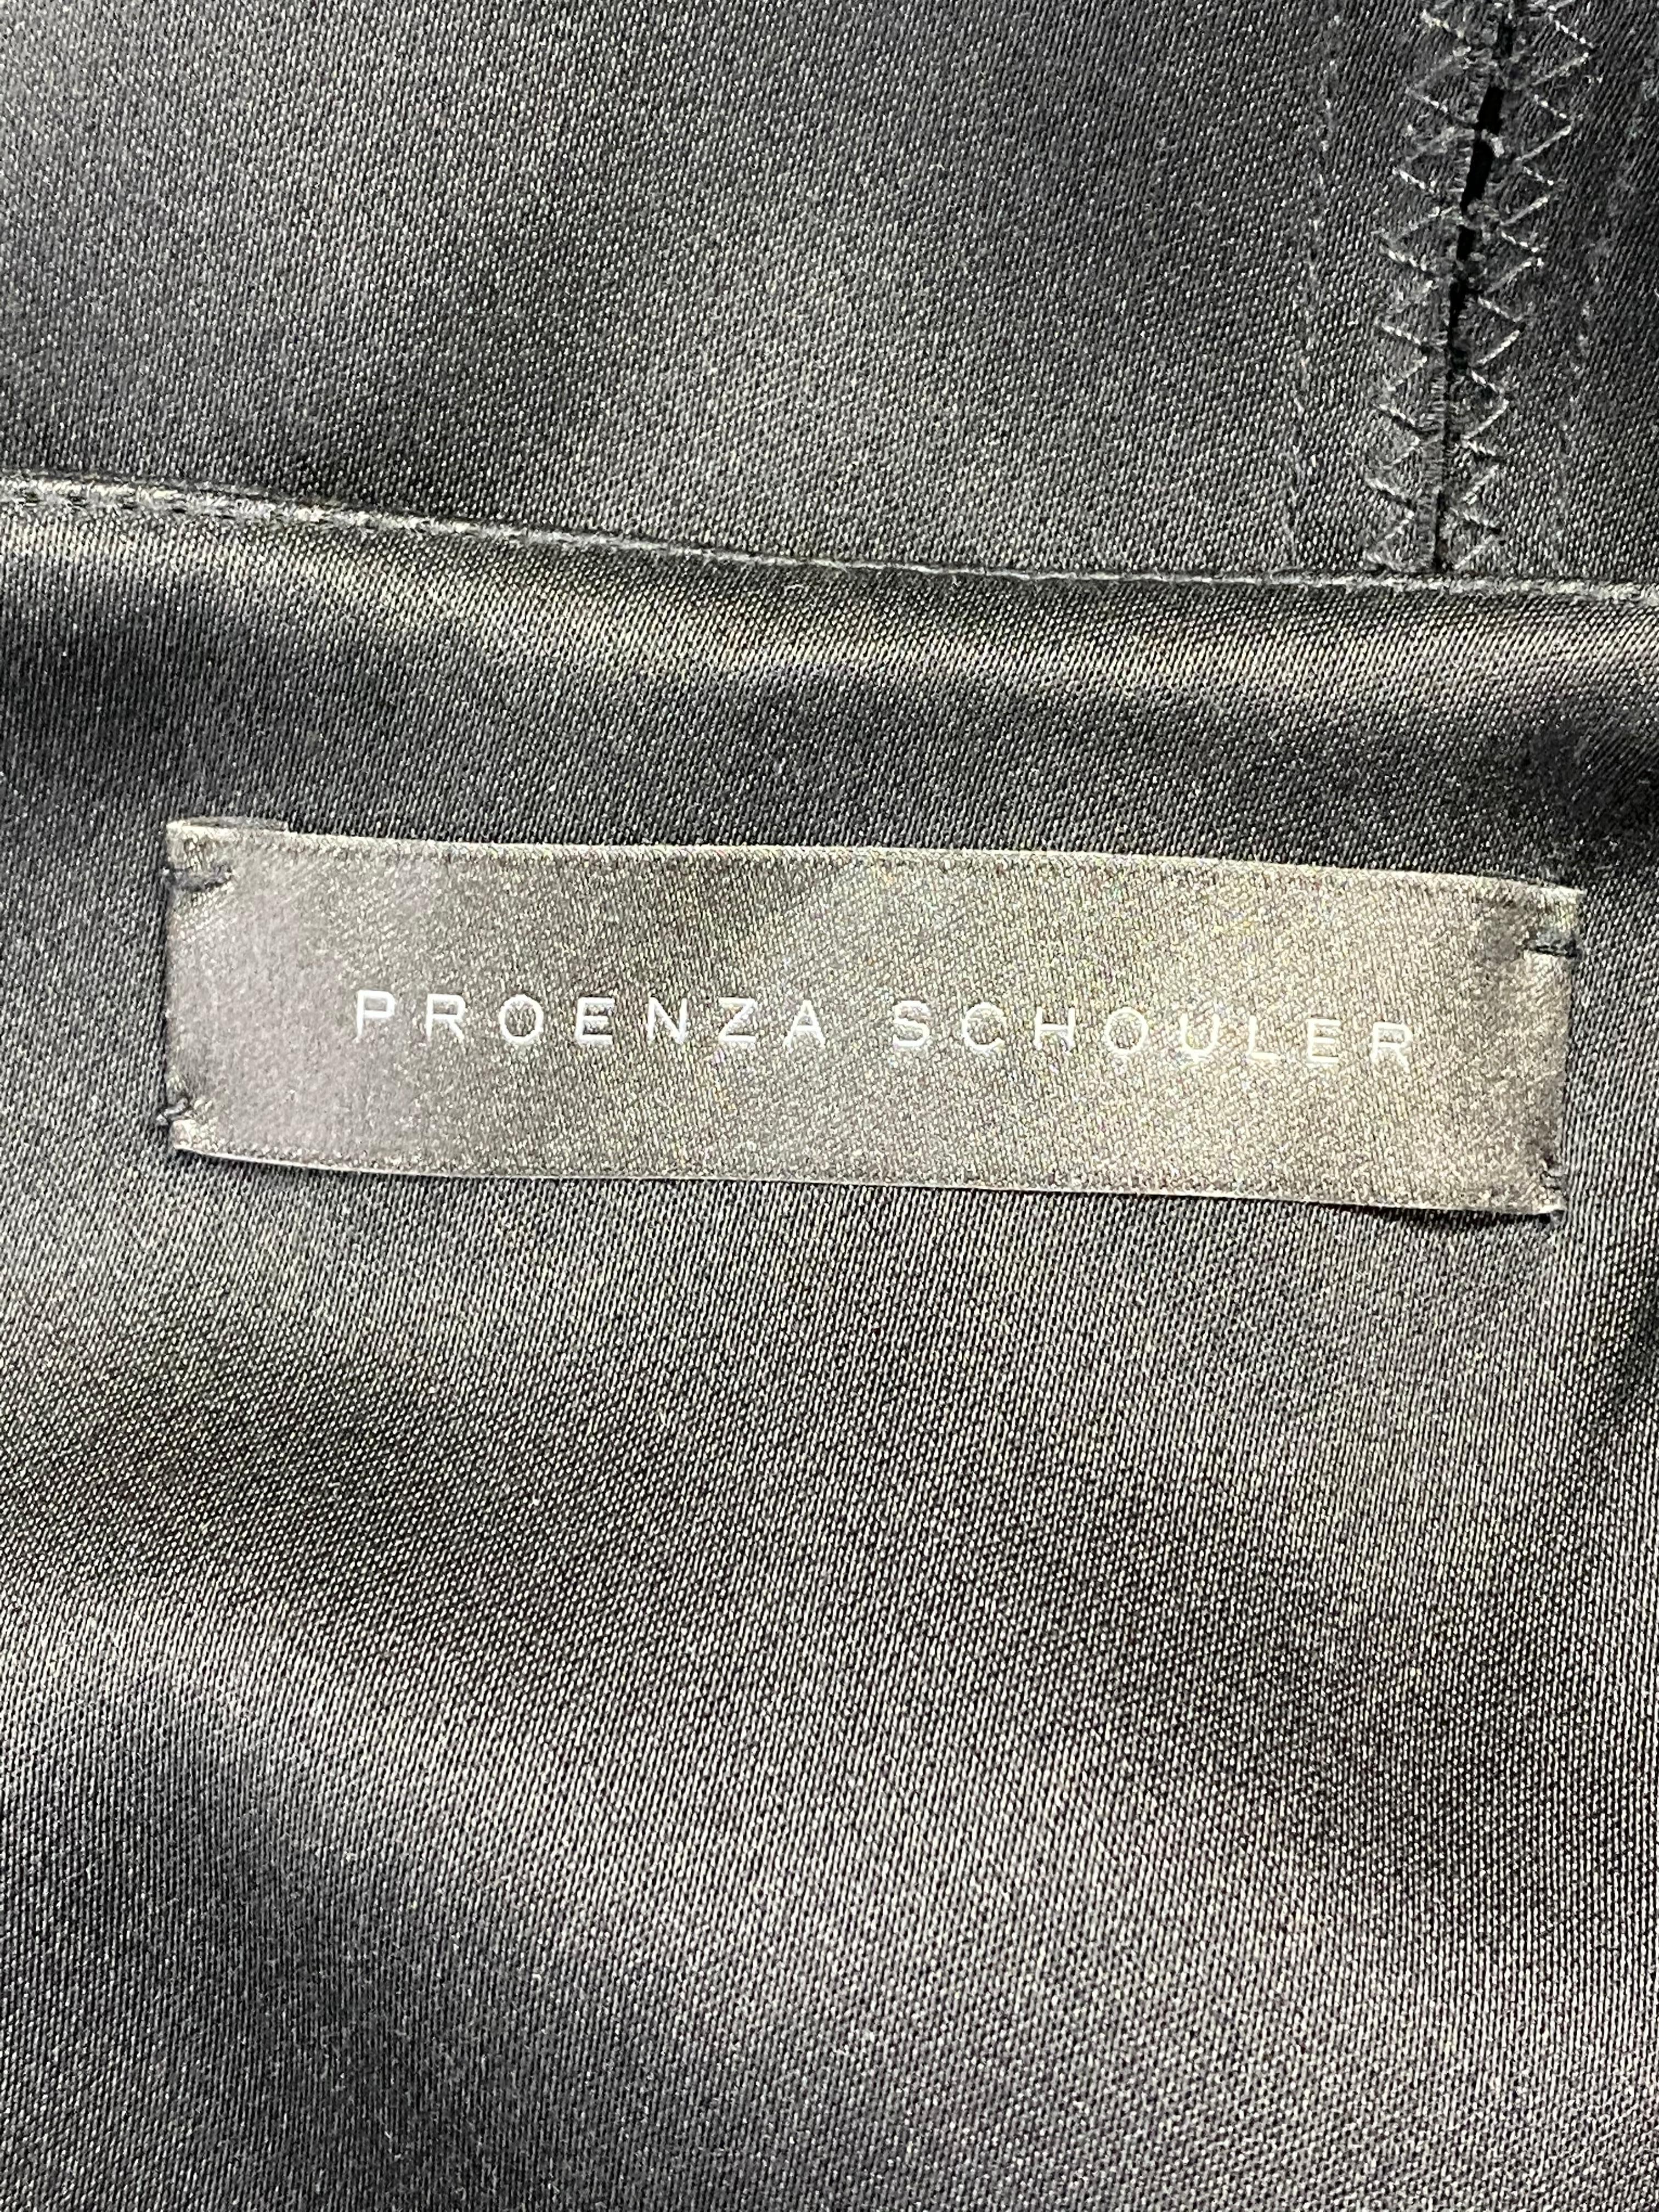 Proenza Schouler Black Silk Mini Dress, Size Small For Sale 2